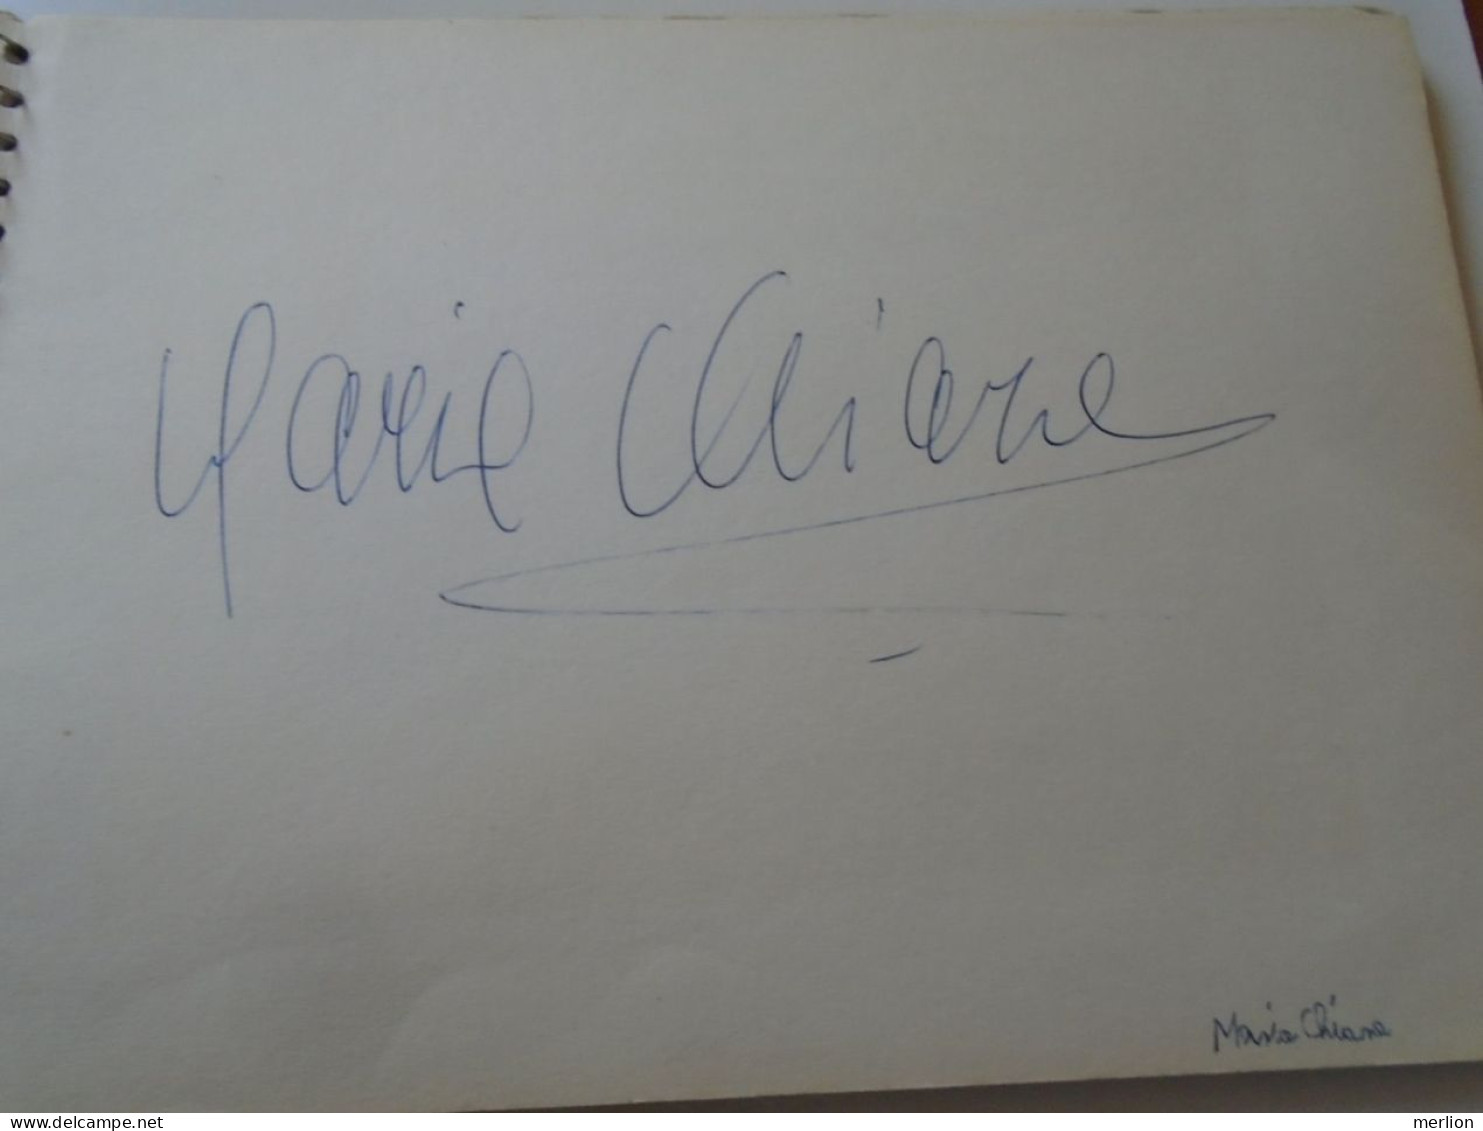 D203334  Signature -Autograph  - Maria Chiara  - Italia  Opera  -Soprano  1981 - Cantantes Y Musicos